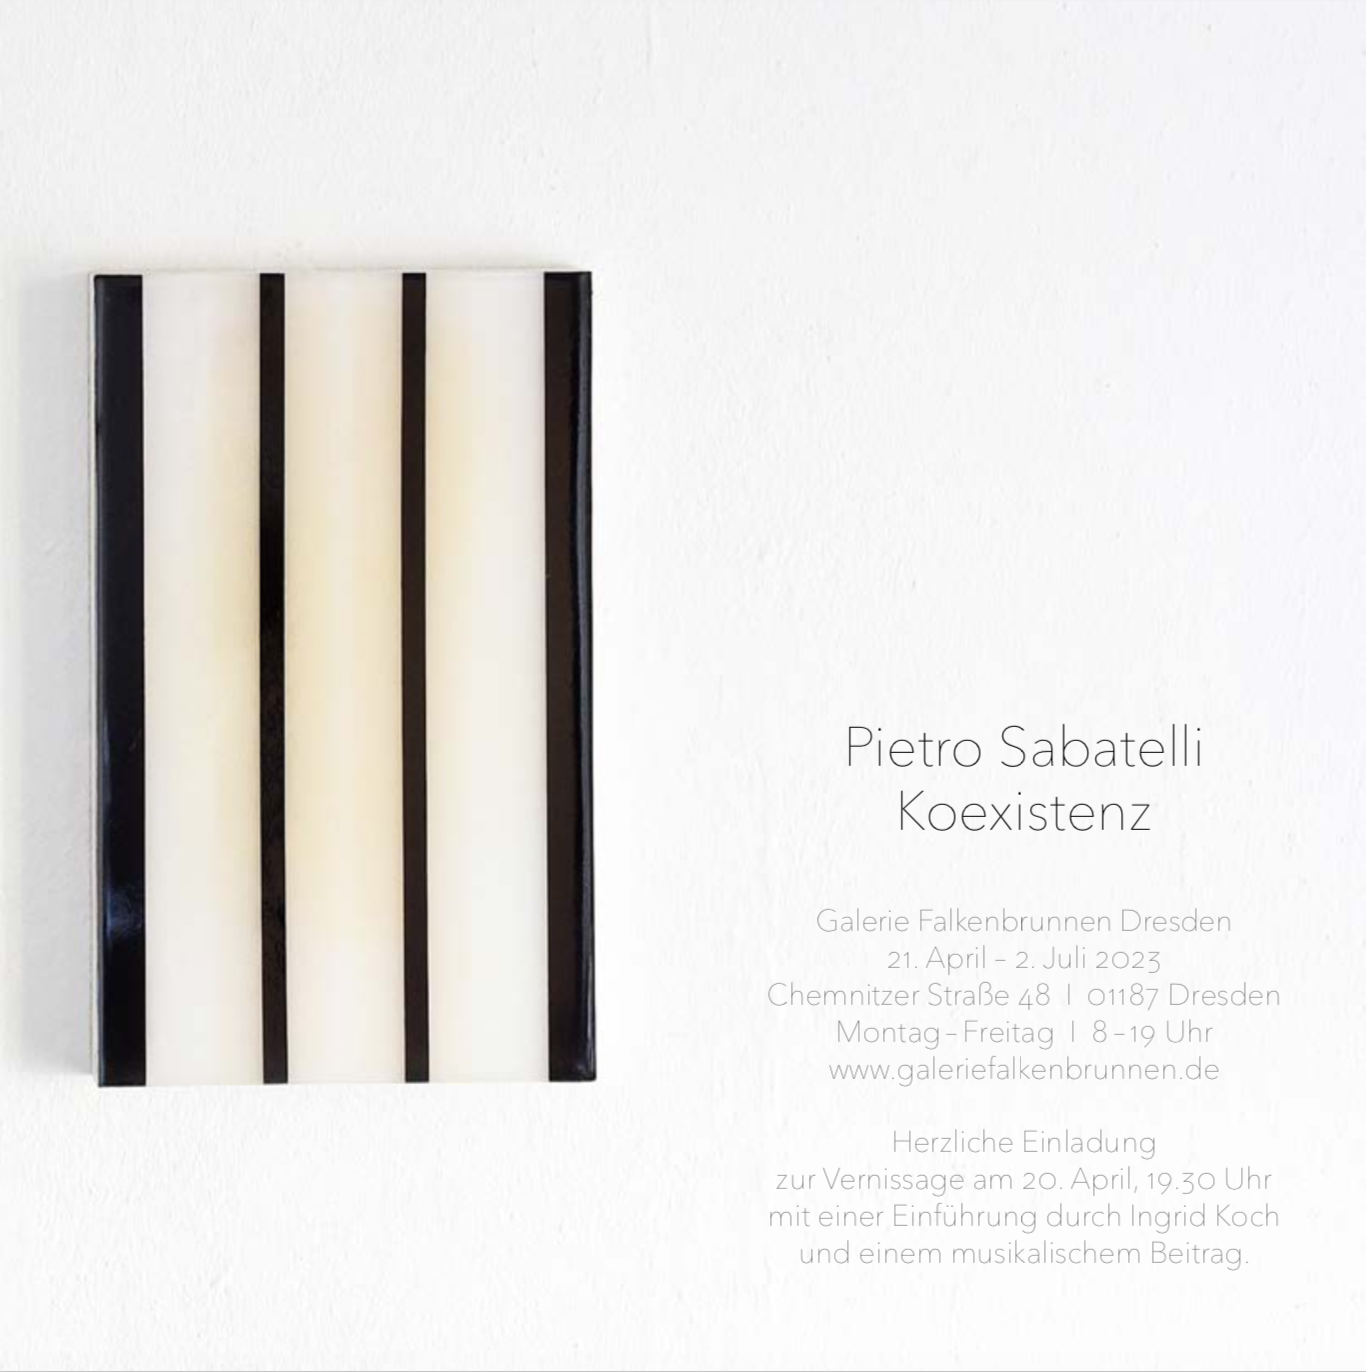 Pietro Sabatelli - Koexistenz exhibition, 2023